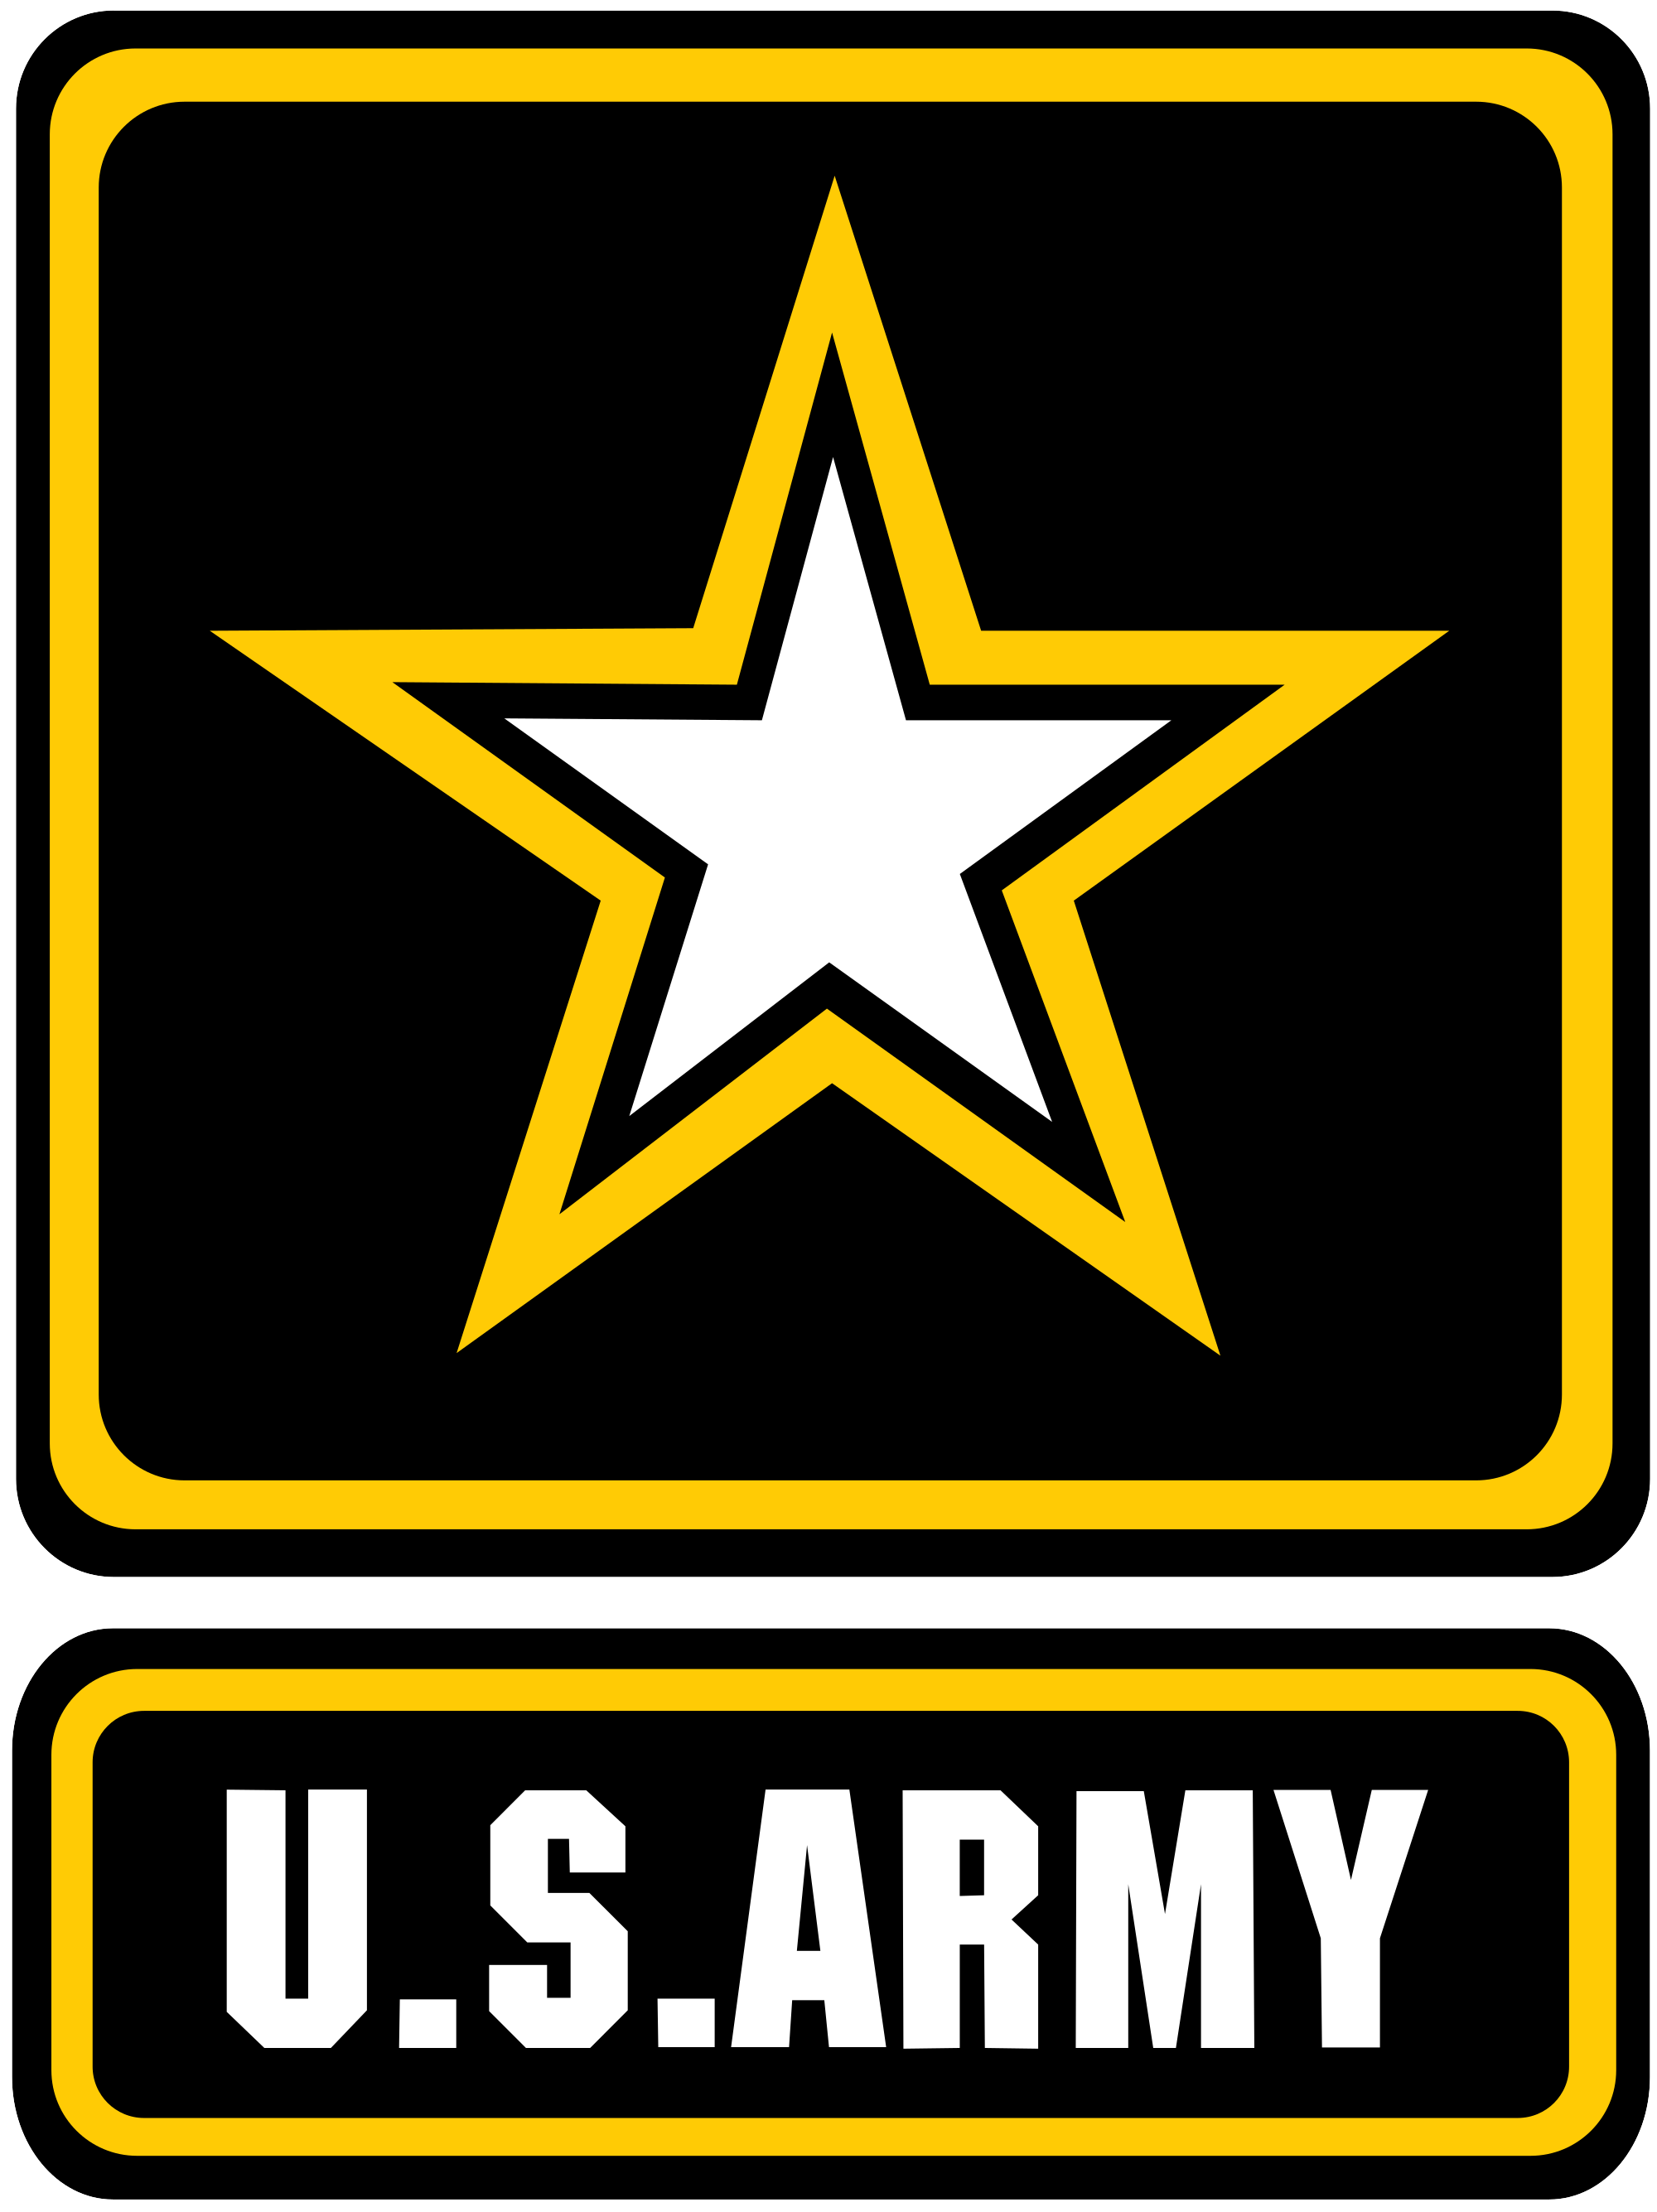 political science U.S. Army logo